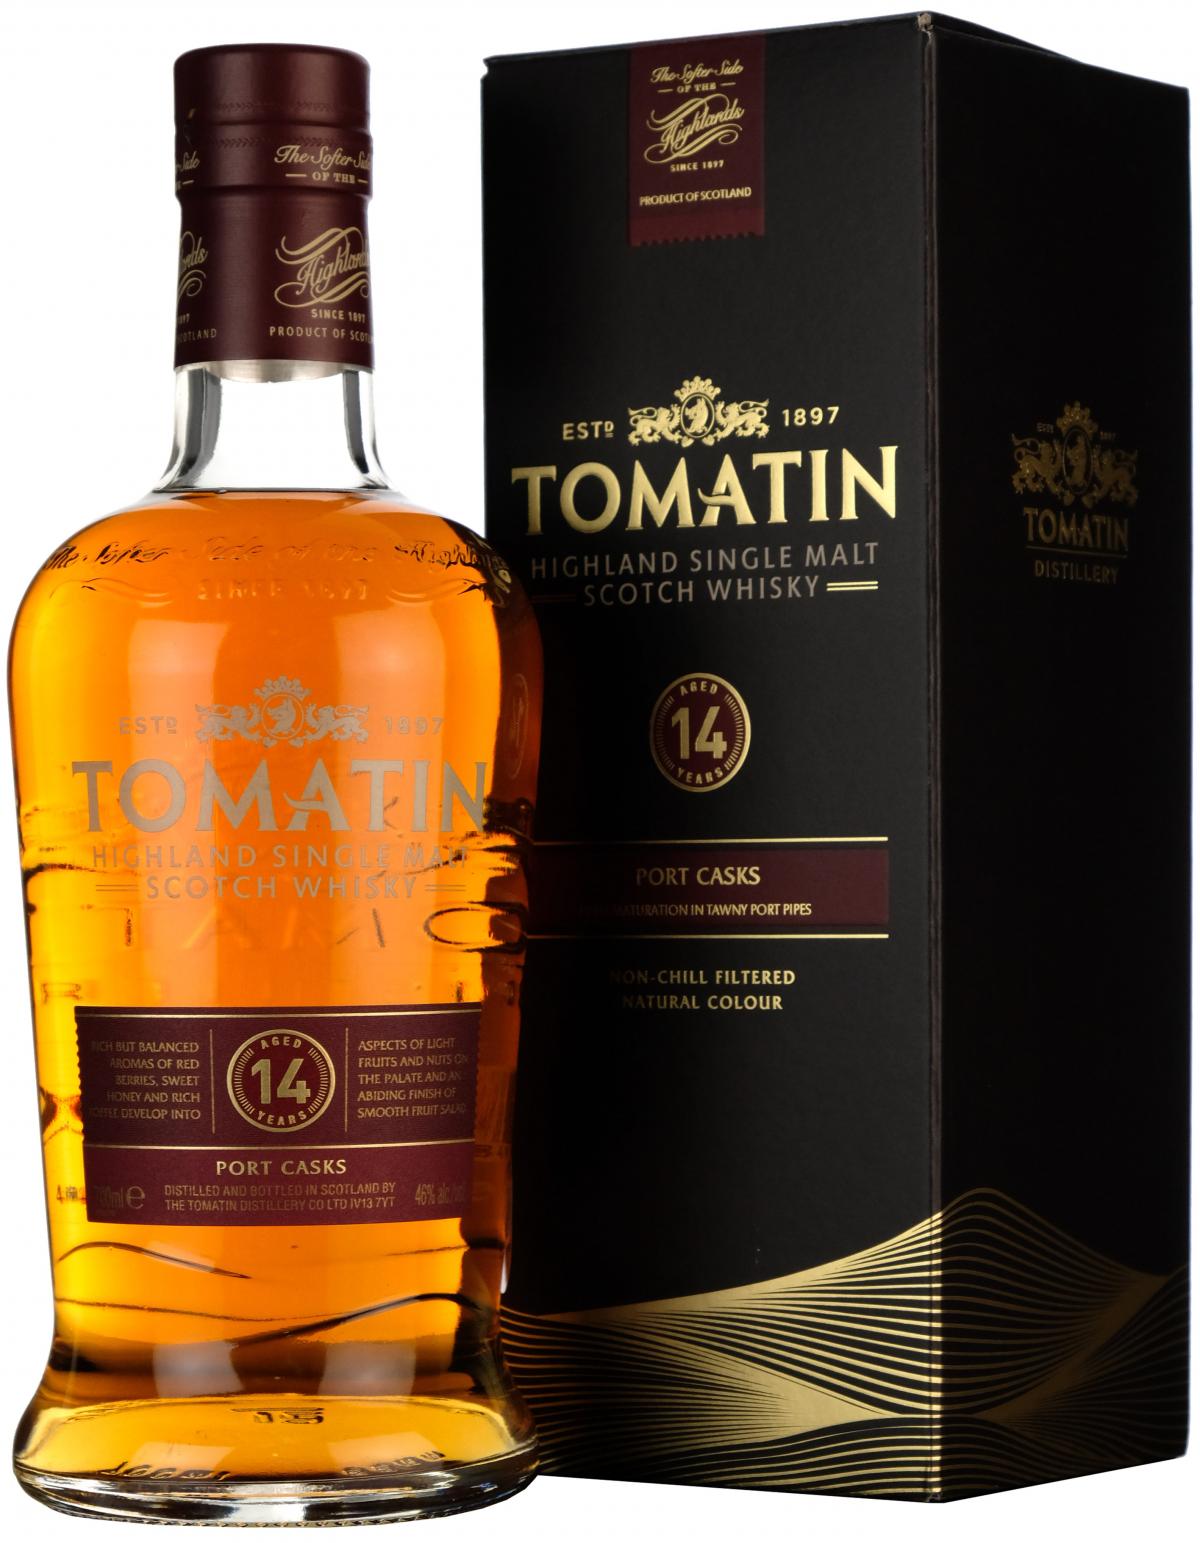 tomatin 14 year old, highland single malt scotch whisky